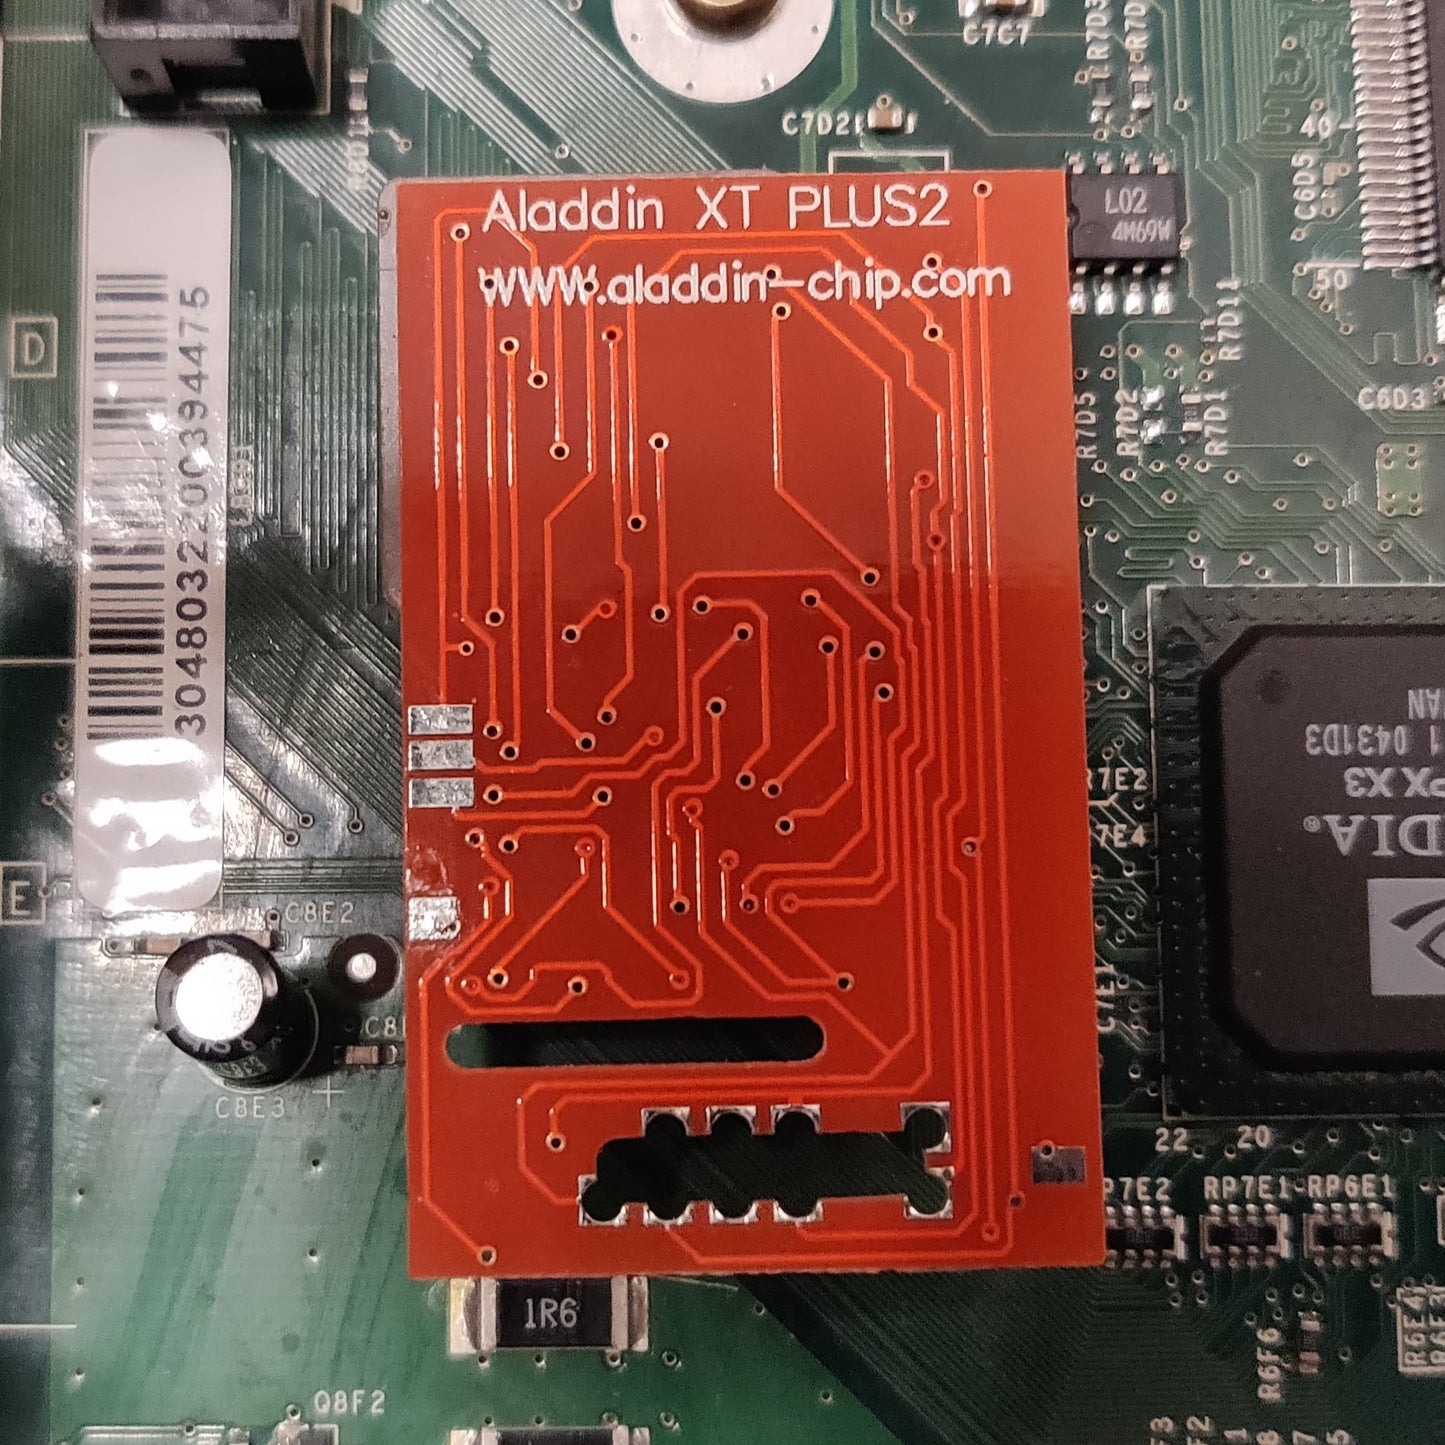 XBOX - XBlast Aladdin XT Plus 2 w/ 1mb CPLD chip